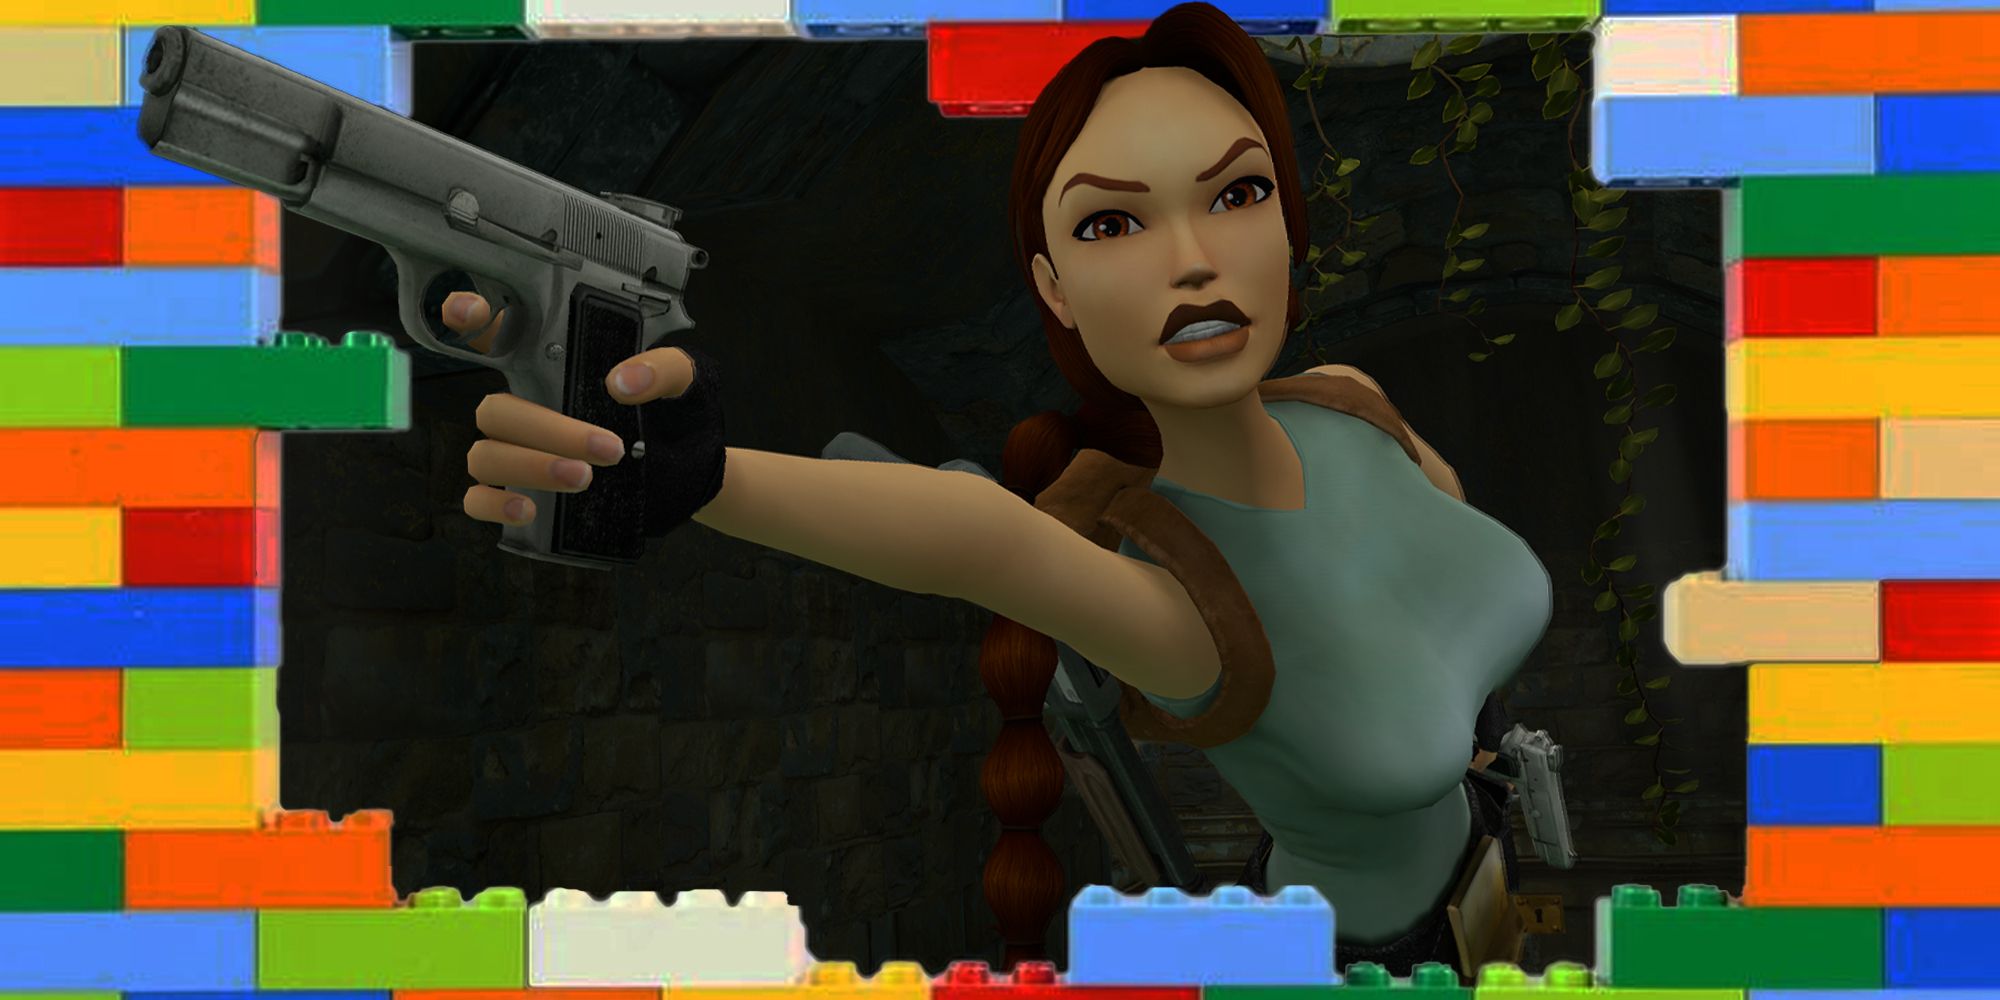 Tomb Raider's Lara Croft shooting through a hole in a LEGO wall